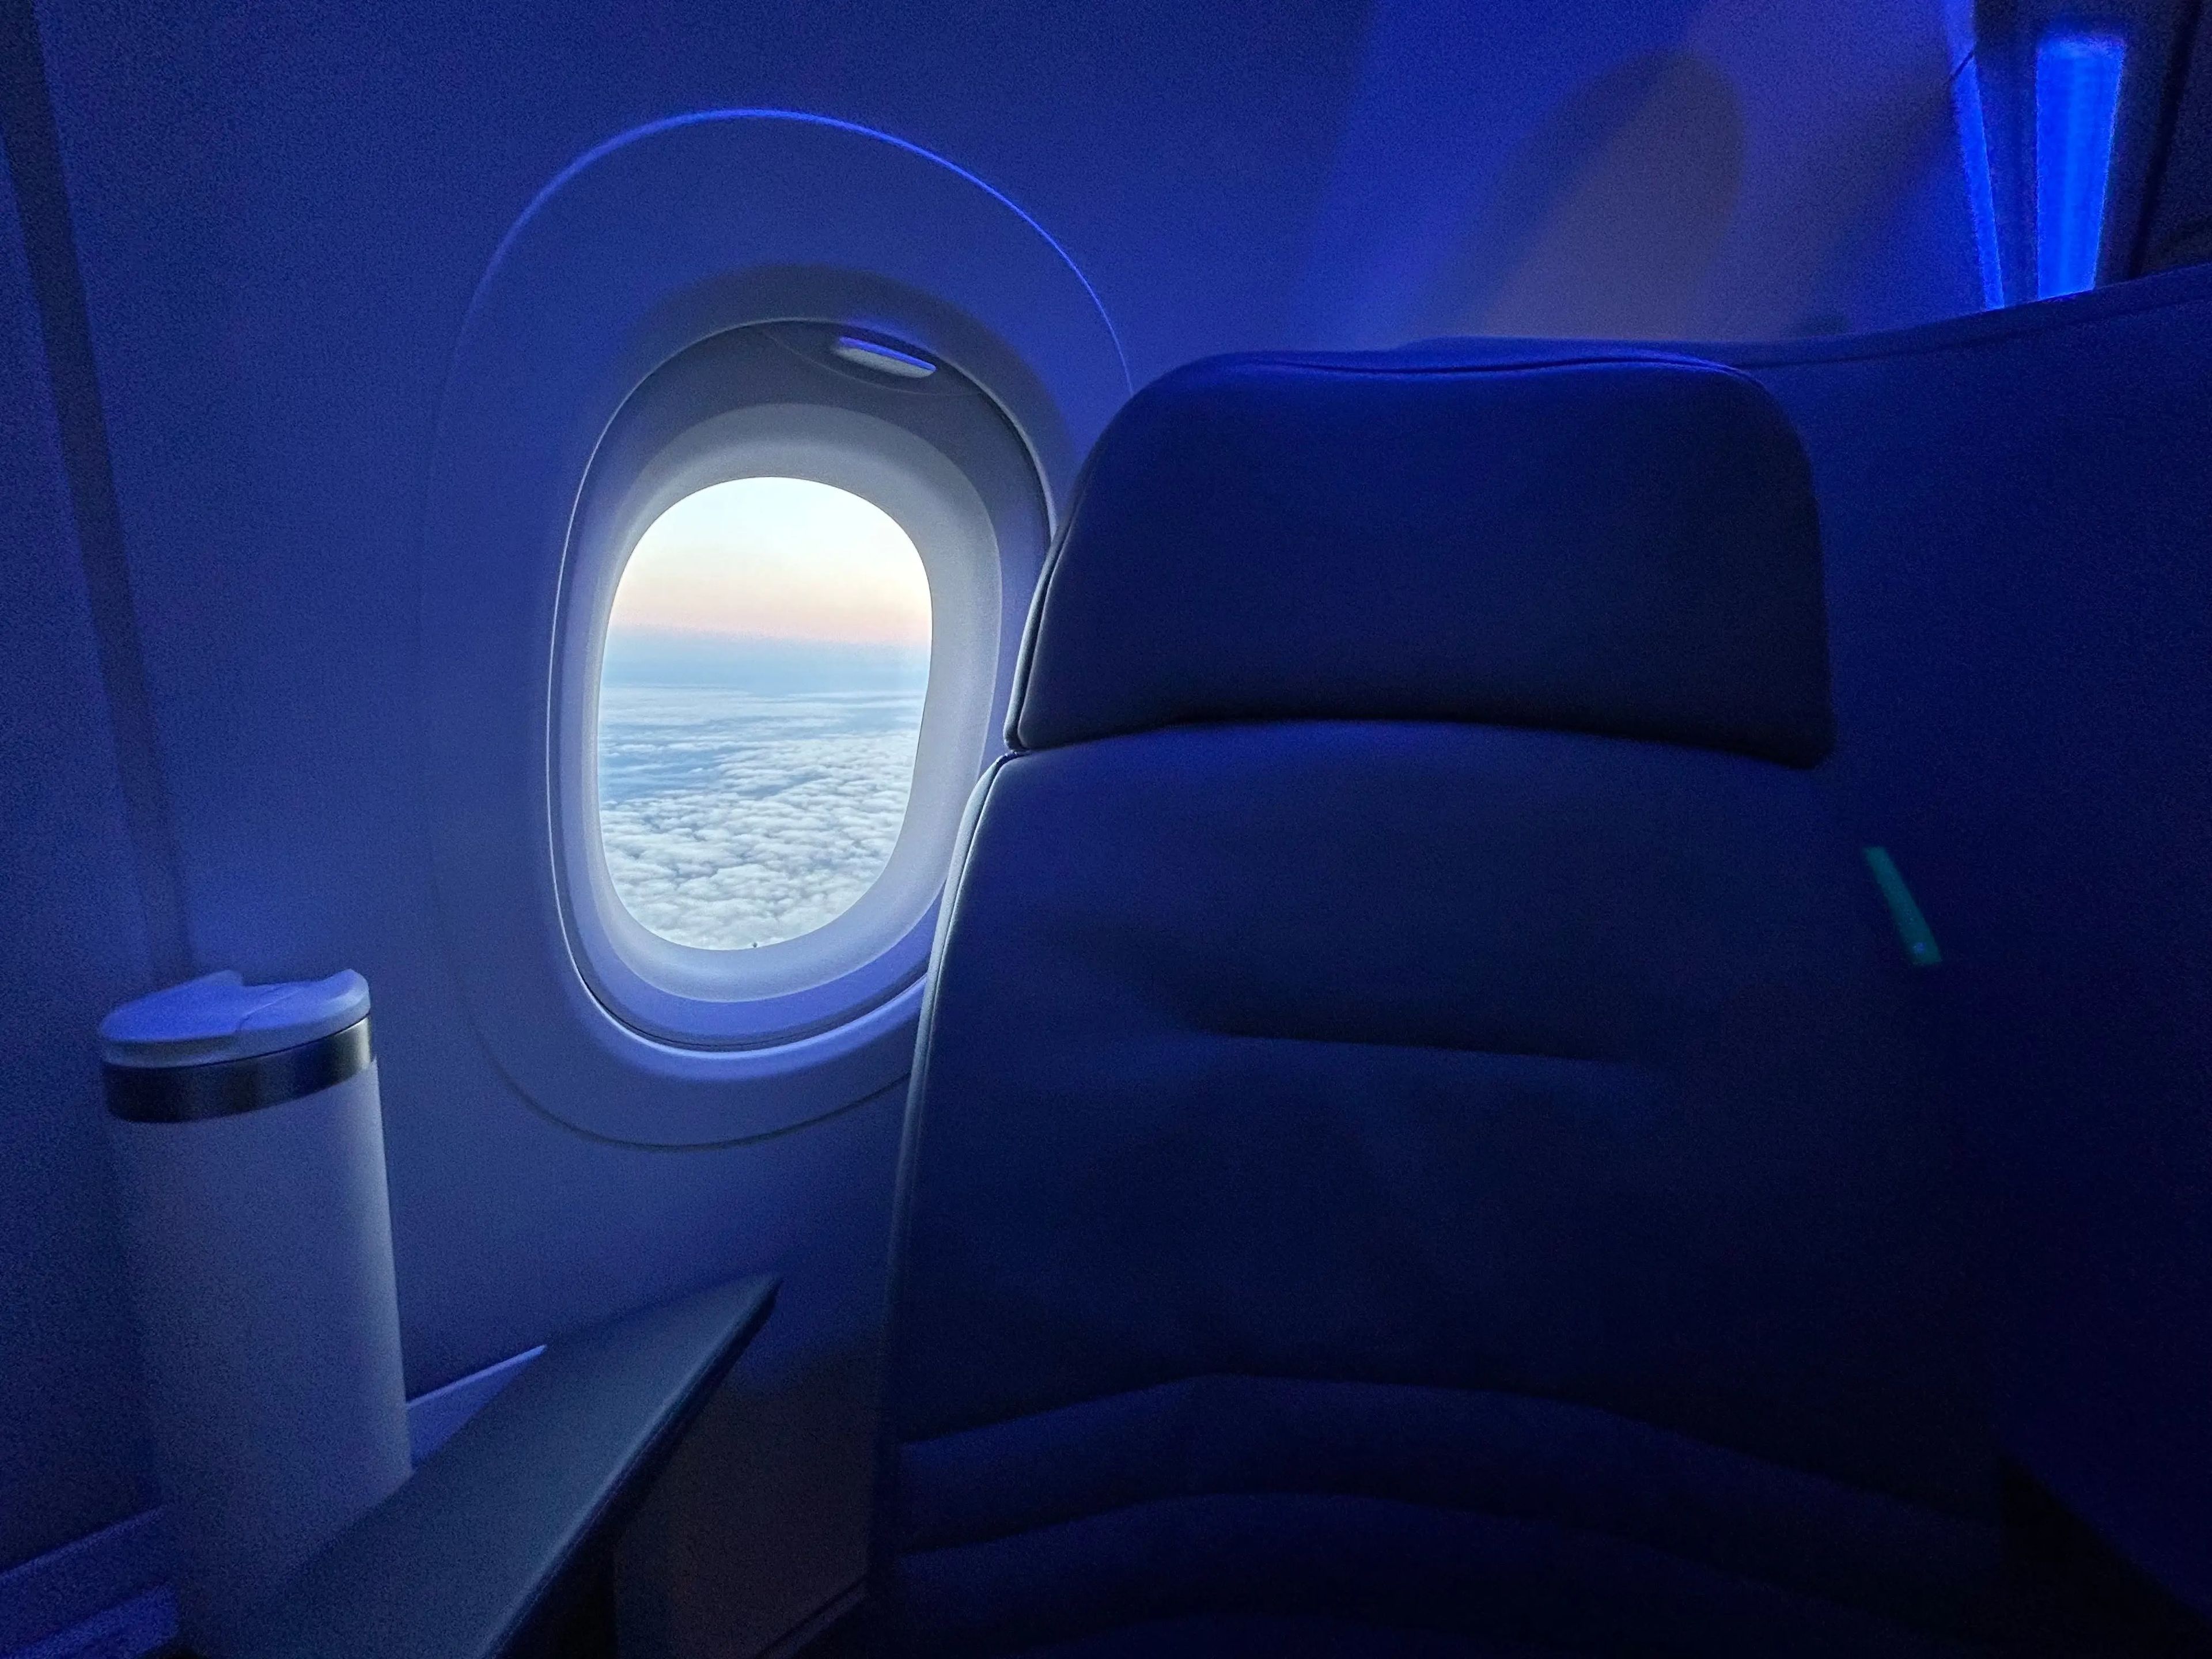 A window on JetBlue flight from New York City to Paris.